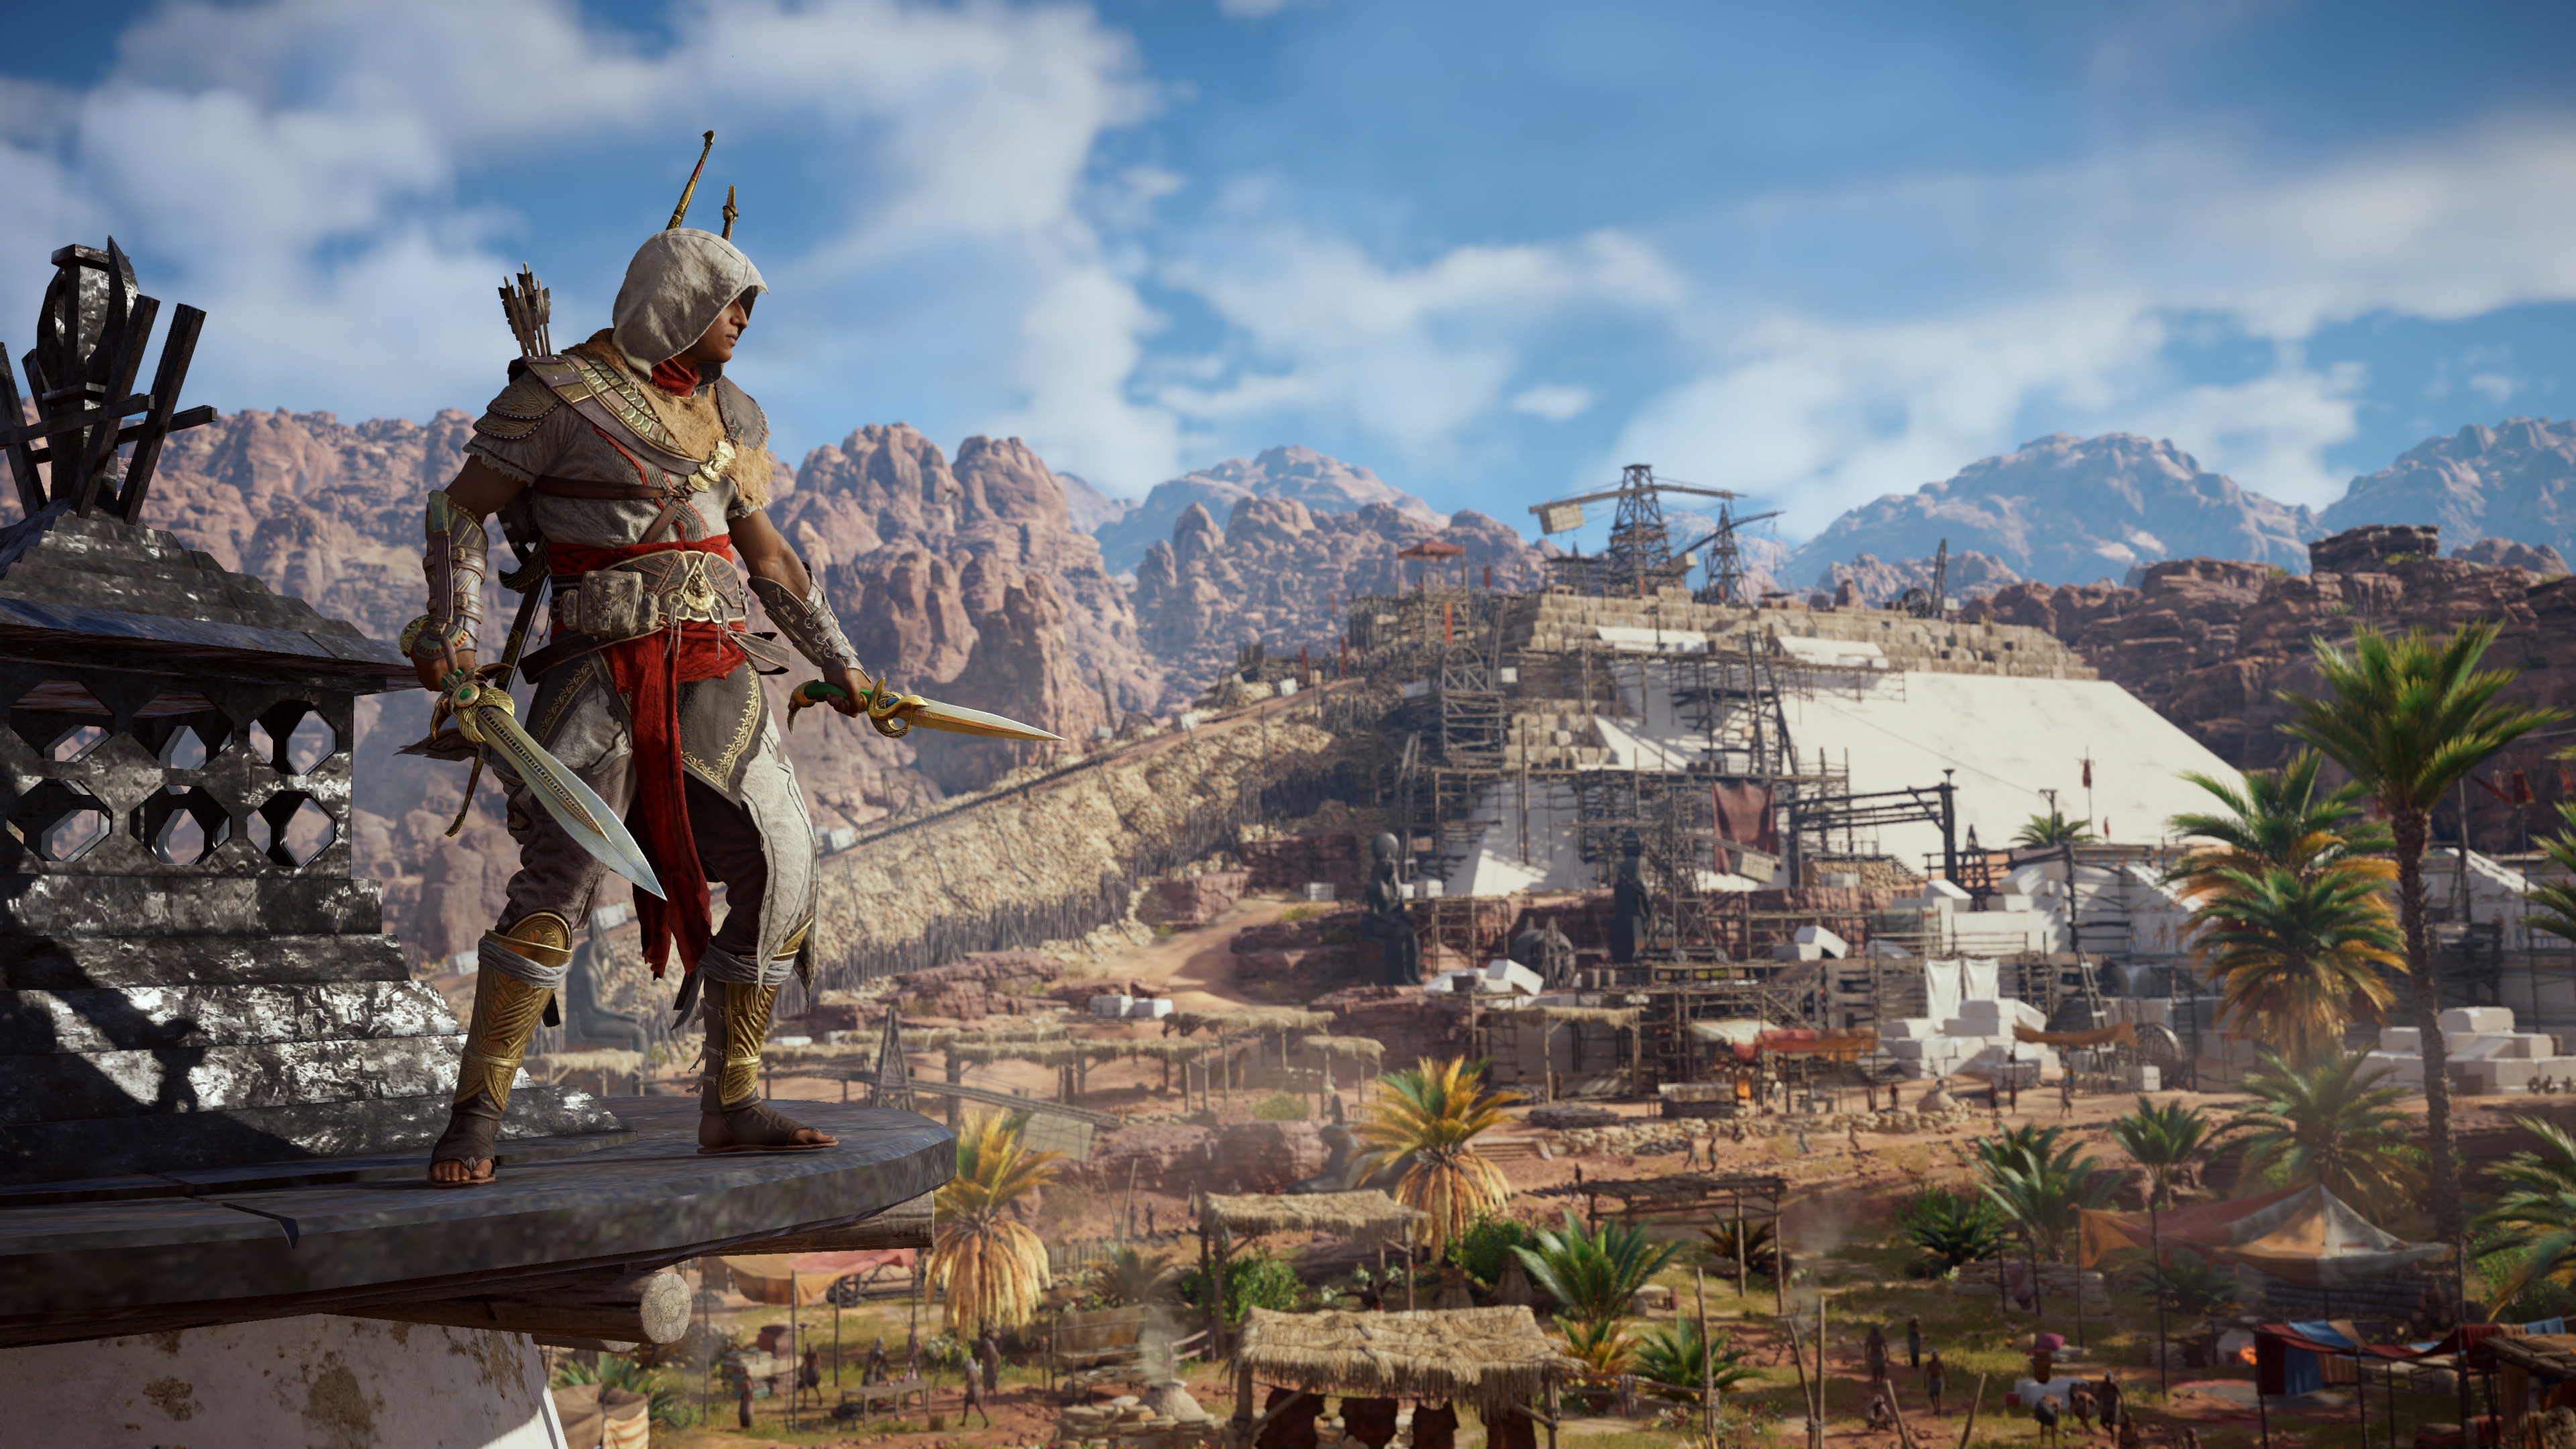 Assassin's Creed Origins - The Hidden Ones Price history · SteamDB